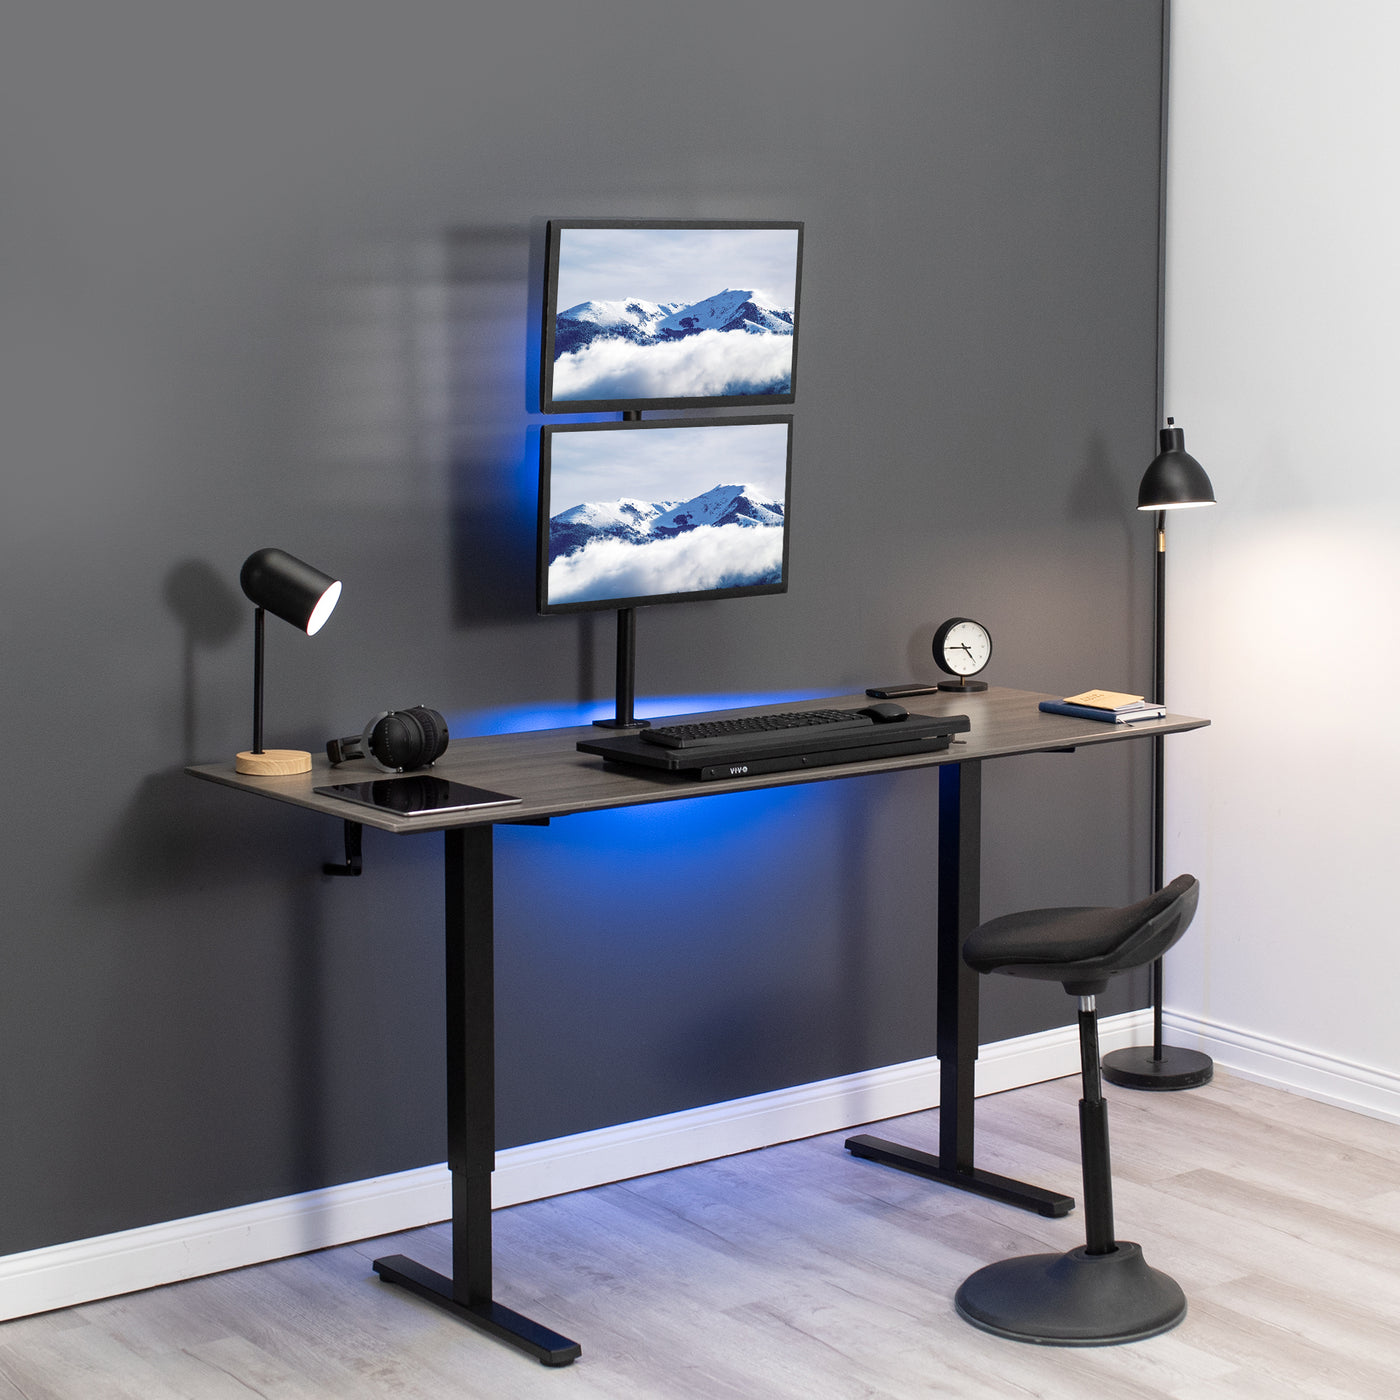 Sturdy adjustable vertical dual monitor ergonomic desk mount for office workstation.